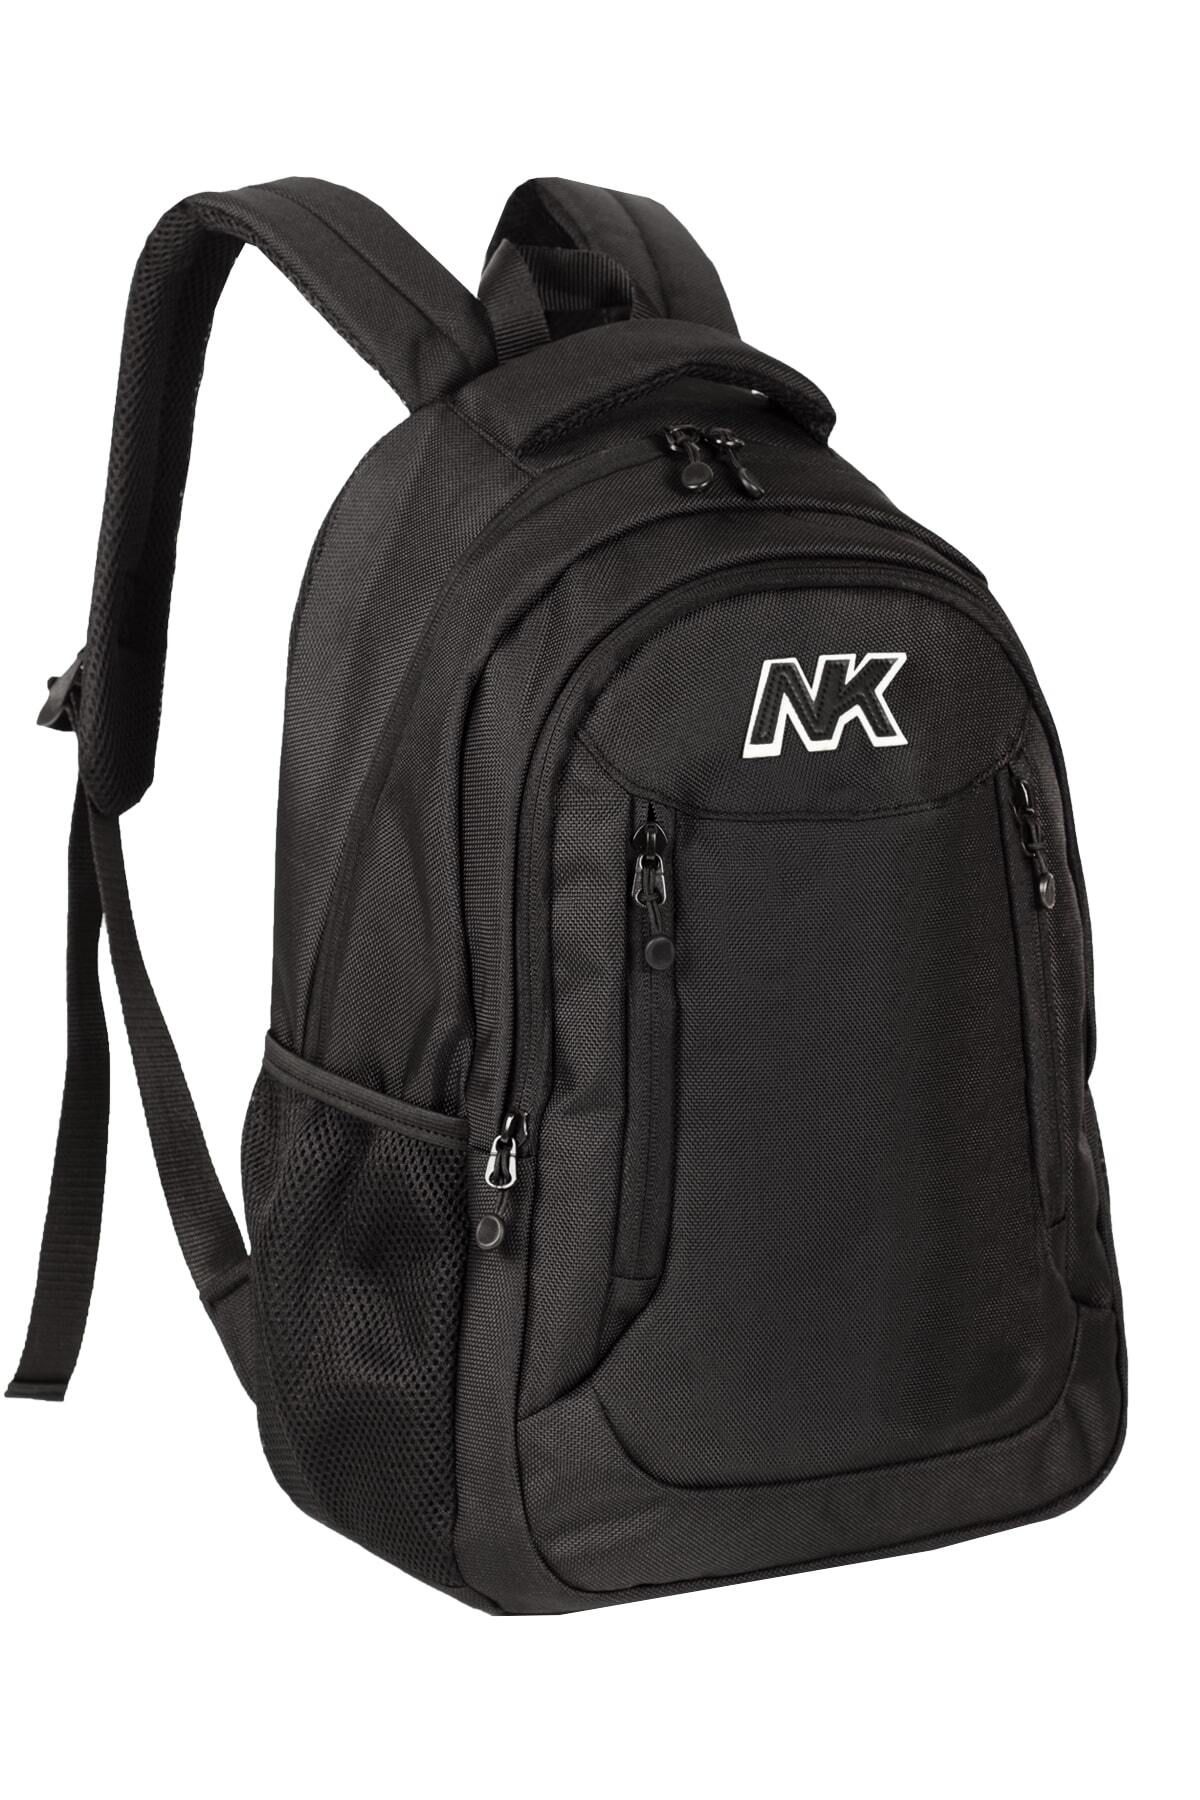 Miracle NK-9005 seyahat ve okul çantası siyah sırt çantası lise ve ortaokul çantası